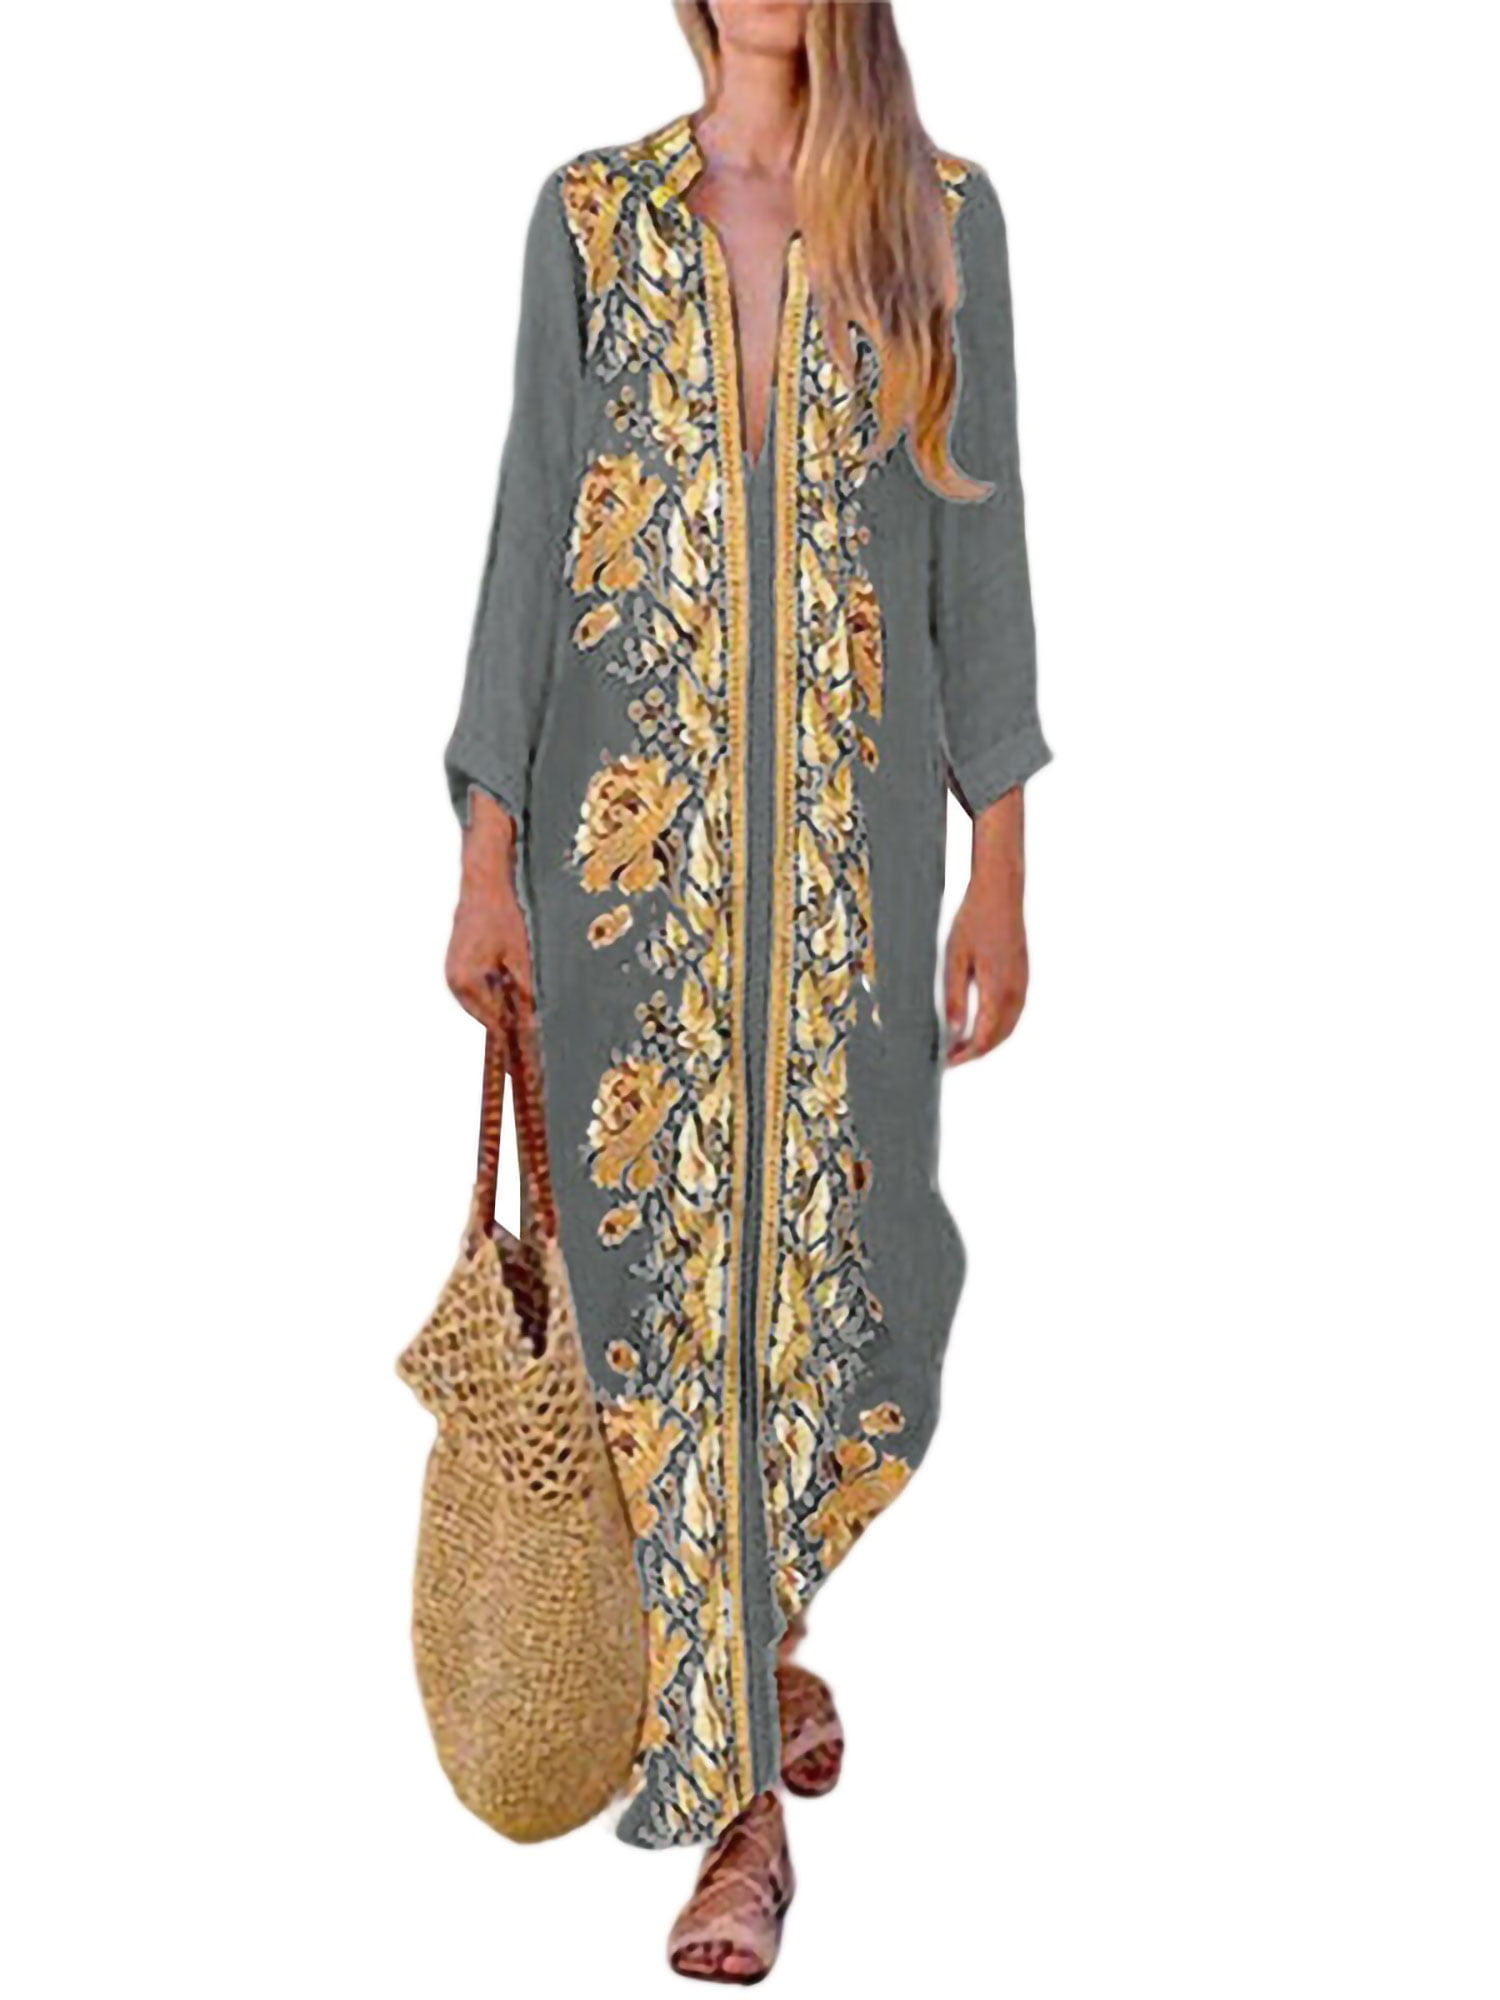 Weant Womens Summer Dress Casual Patchwork Maxi Long Dress Holiday Beach Sundress for Ladies Fashion Vintage 3/4 Sleeve Kaftan Dress Tunic Shirts Blouse Top Dress